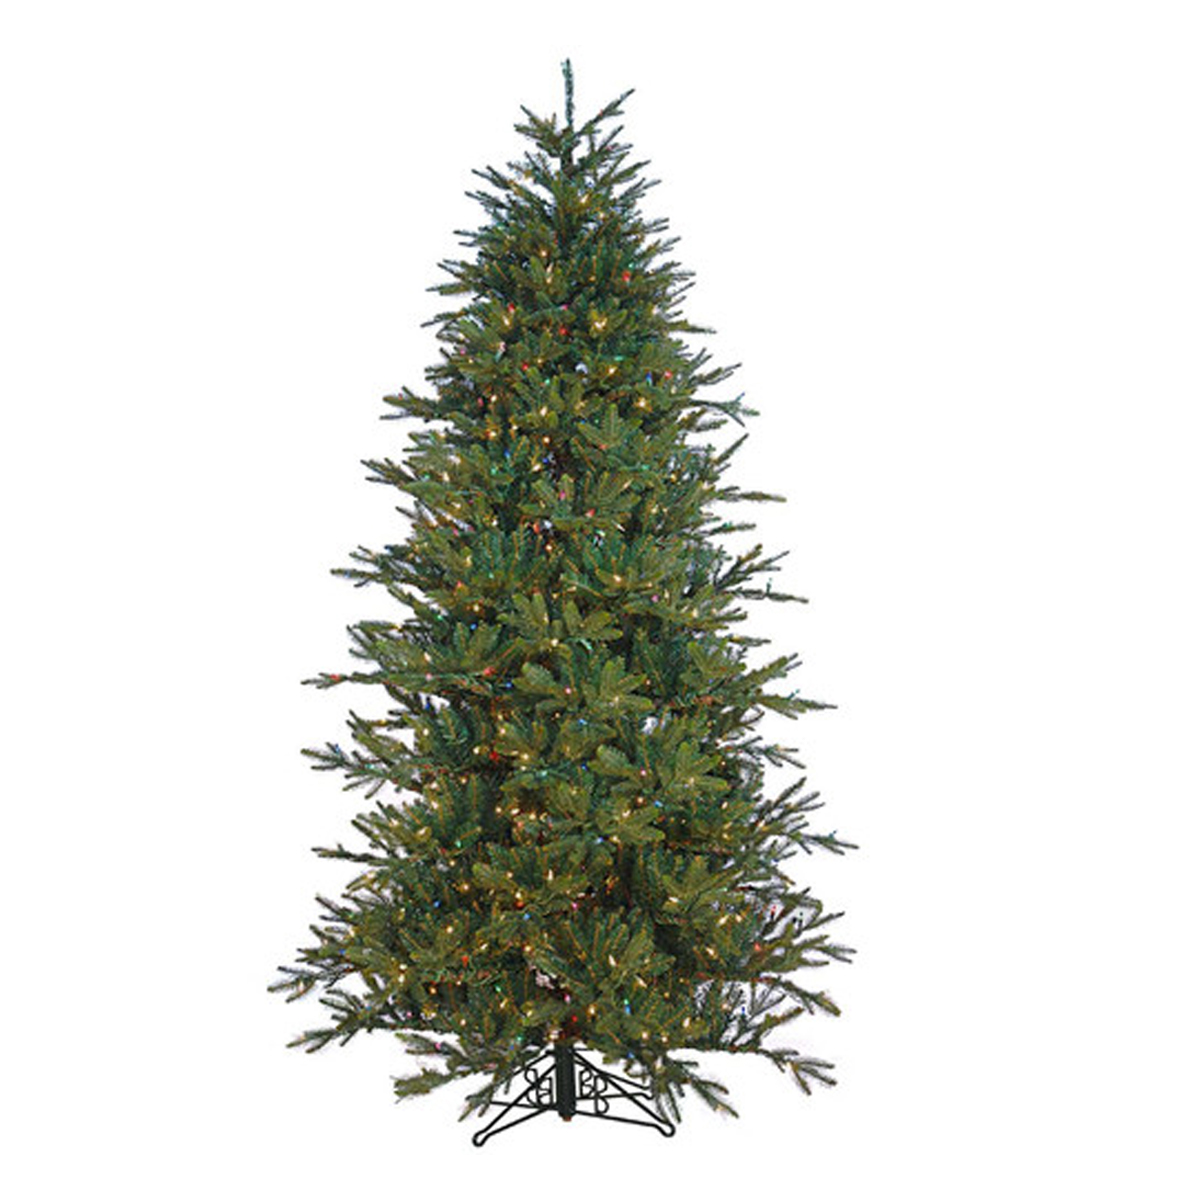 Alaskan Deluxe Christmas Tree - Slim-Frame - Warm White LEDs - One-Plug Pole Power Supply - 7.5ft Tall